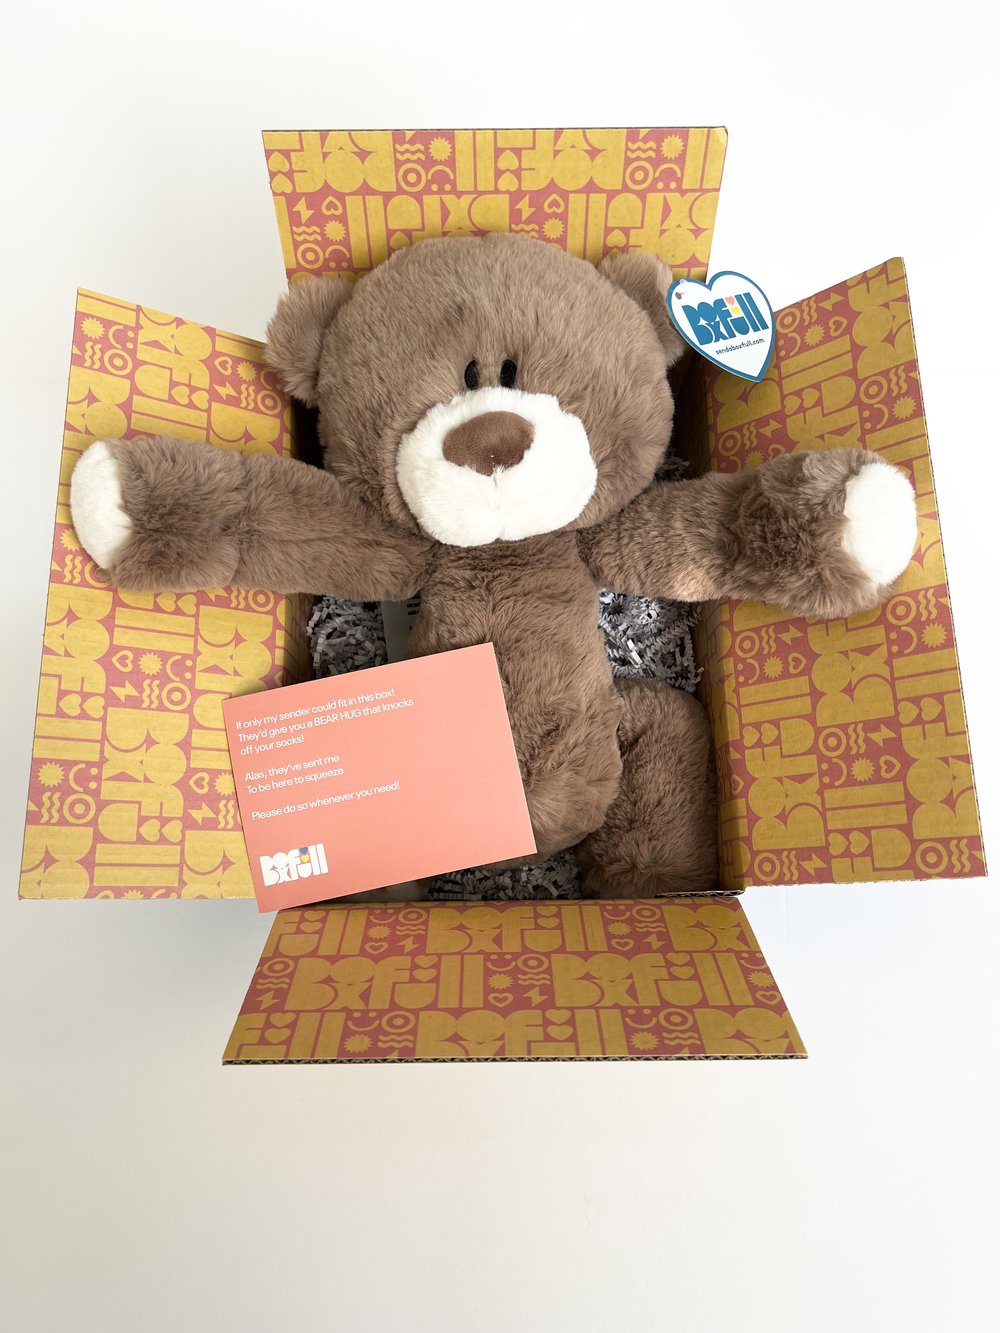 Bear Hugs Gift Box for Valentine's Day